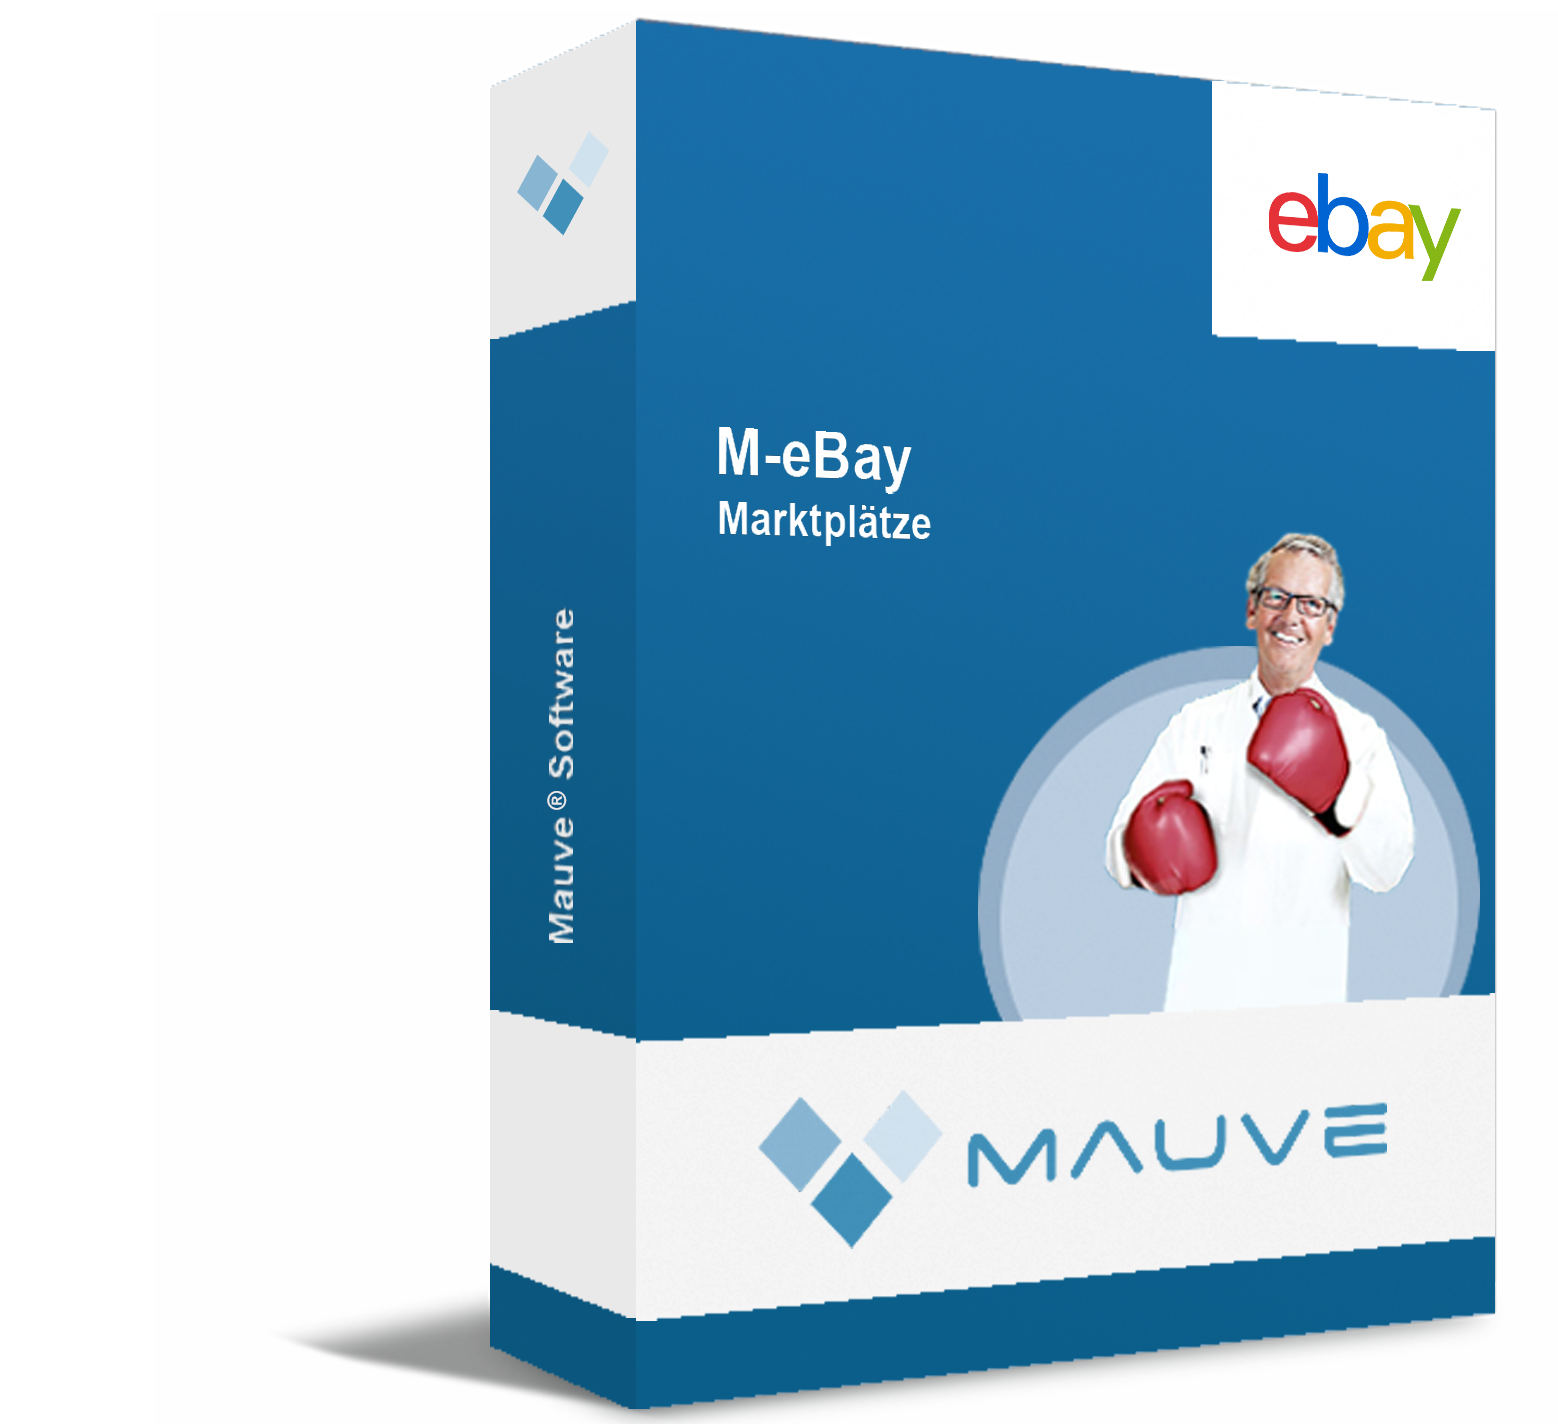 M-eBay